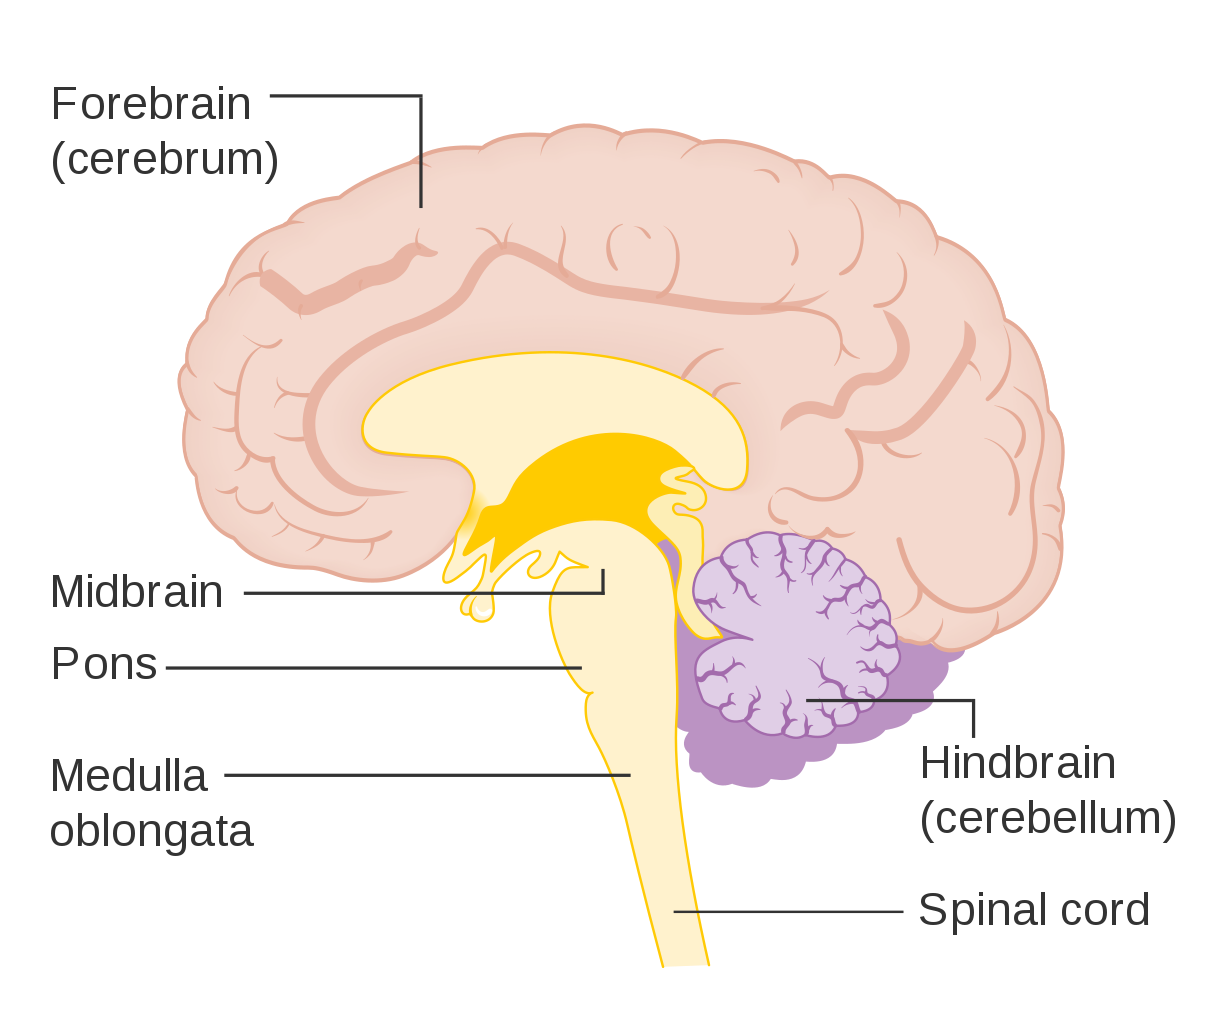 Diagram of forebrain, midbrain, and hindbrain